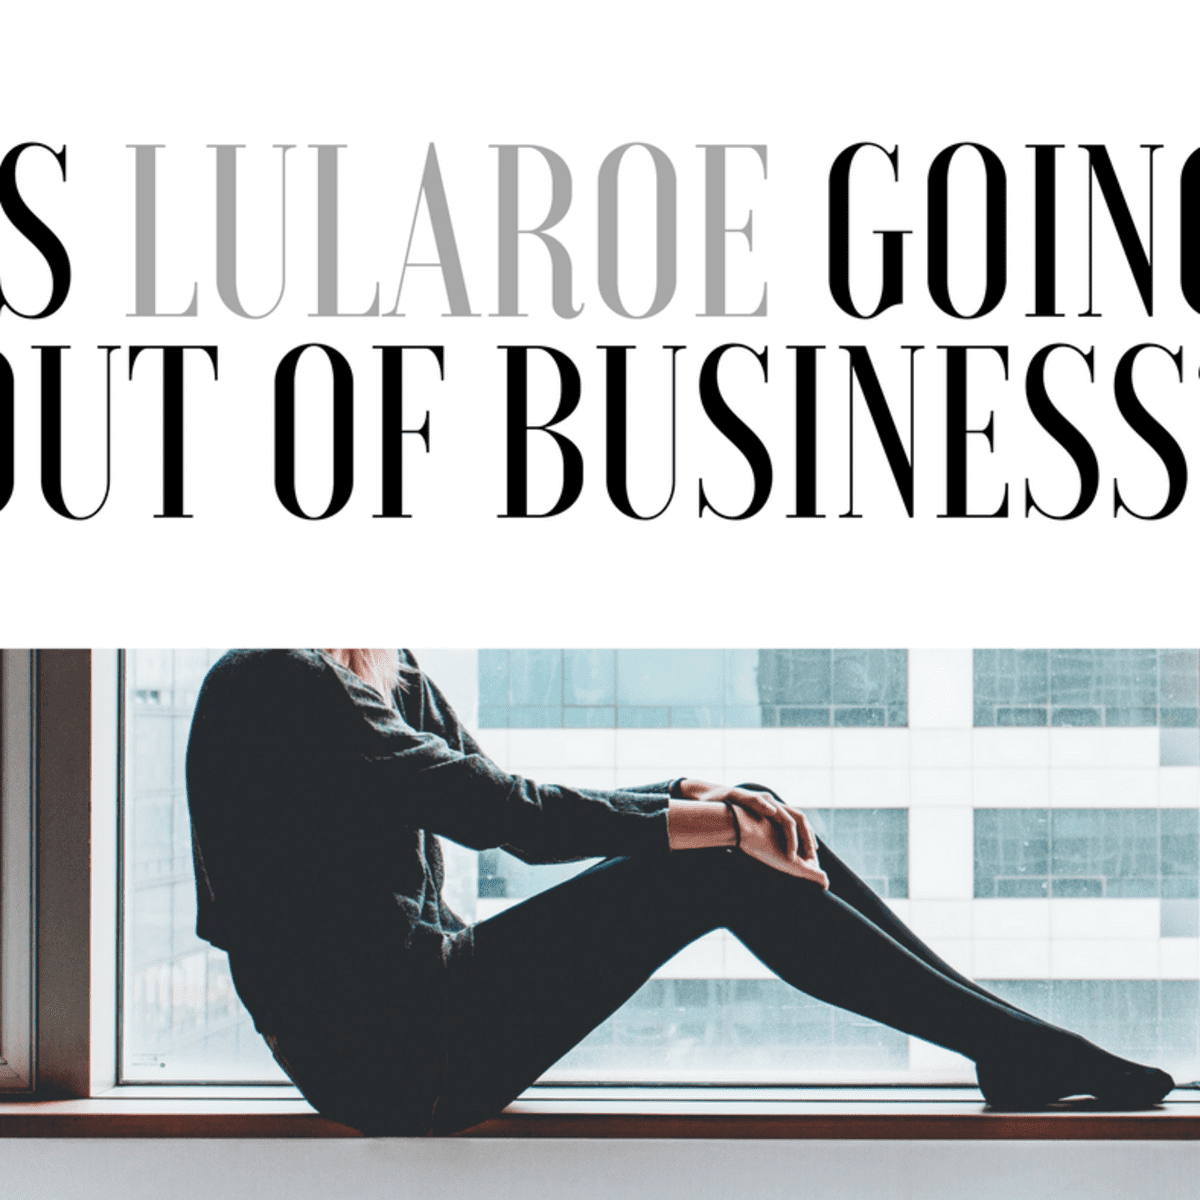 Is LuLaRoe, RueNoNo? The fashion company is under fire for return policies